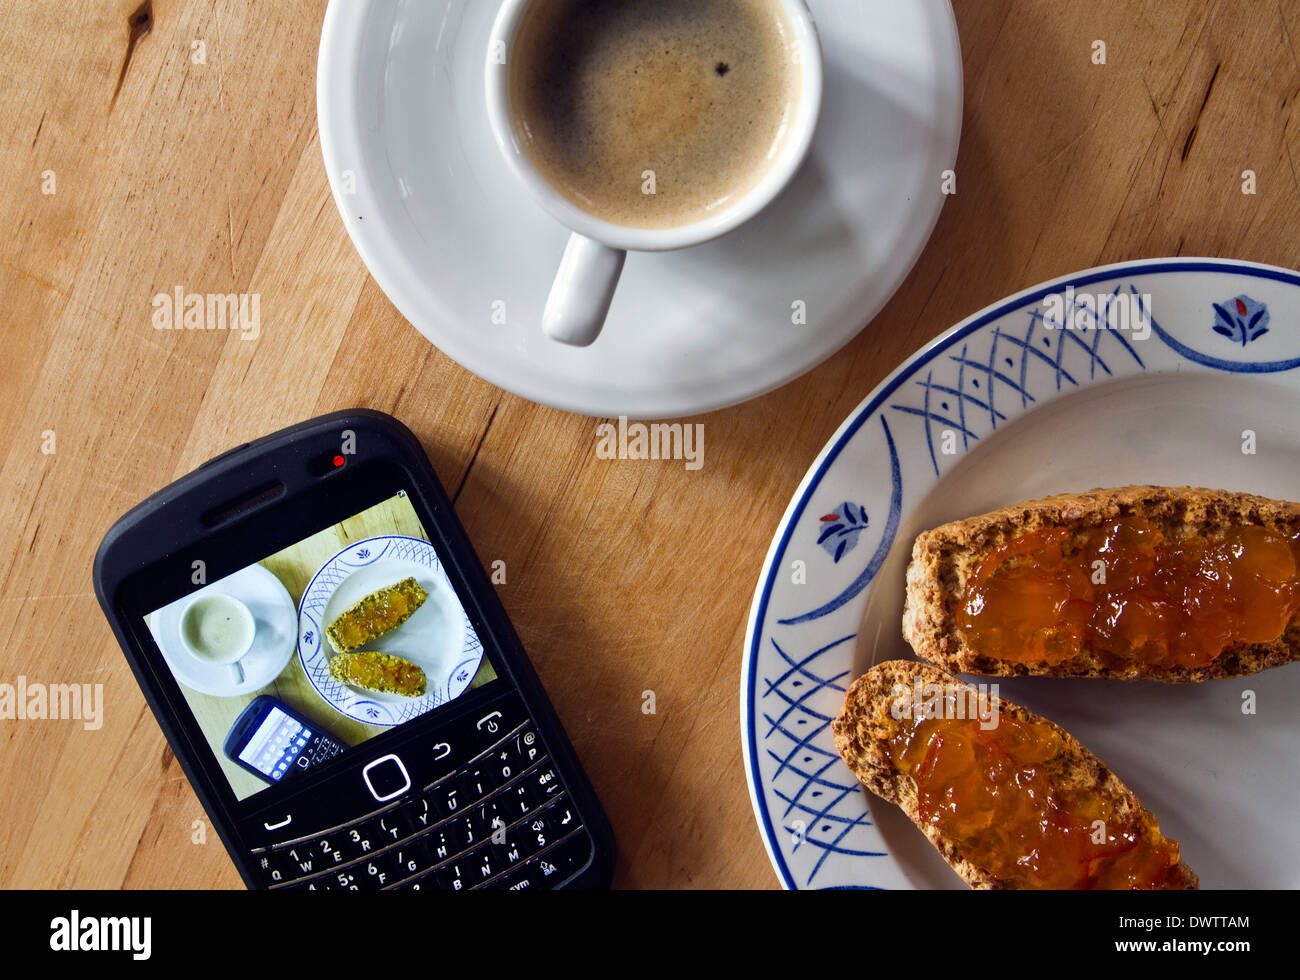 Blackberry phone with coffee Stock Photo